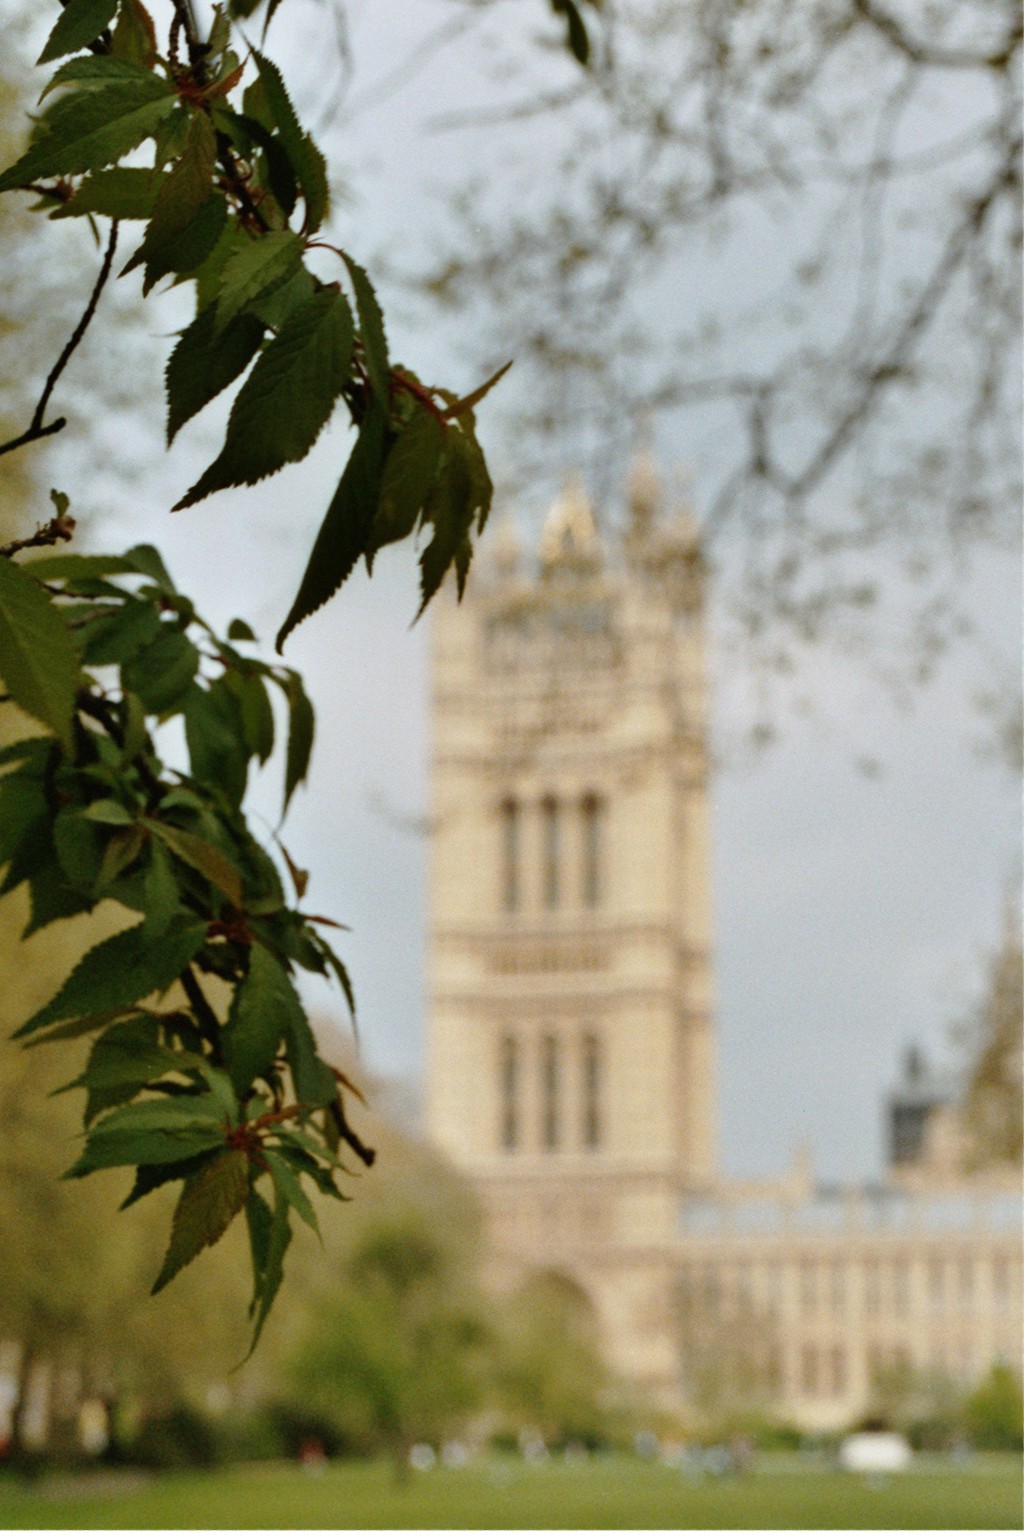 Parliament Garden (London, UK) / April 2008